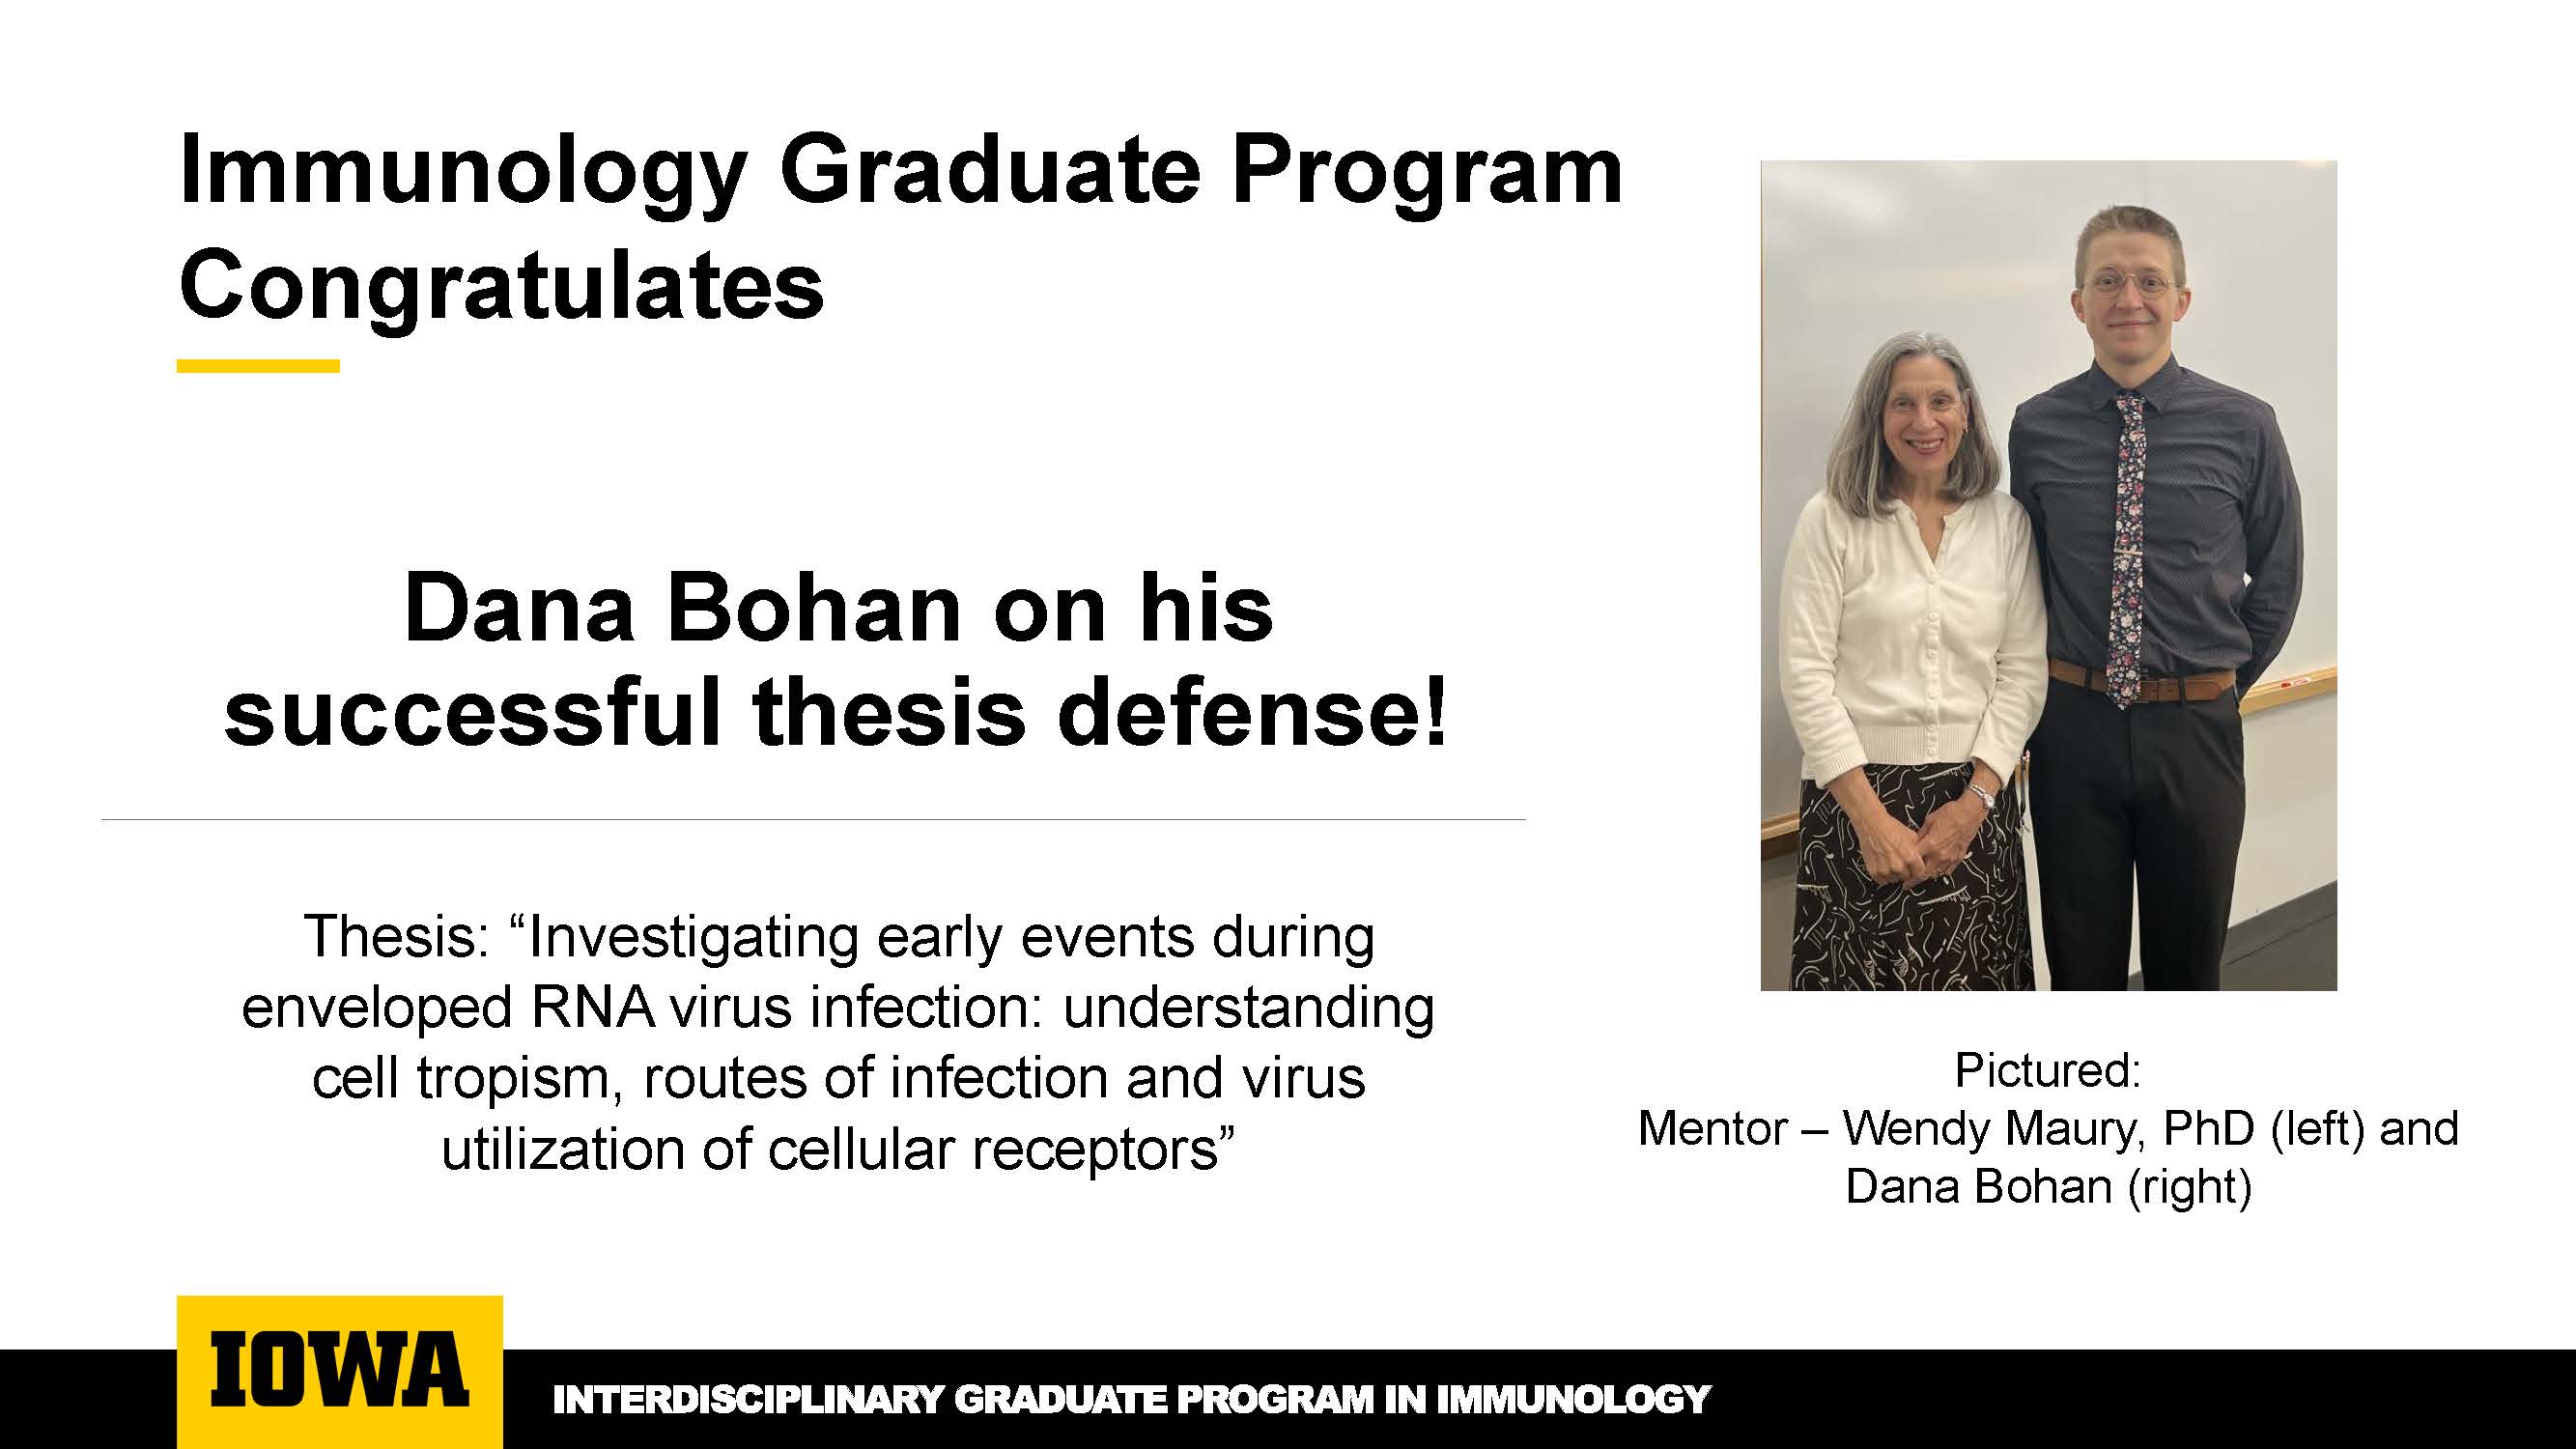 Dana Bohan Image, Successful Defense with mentor Wendy Maury